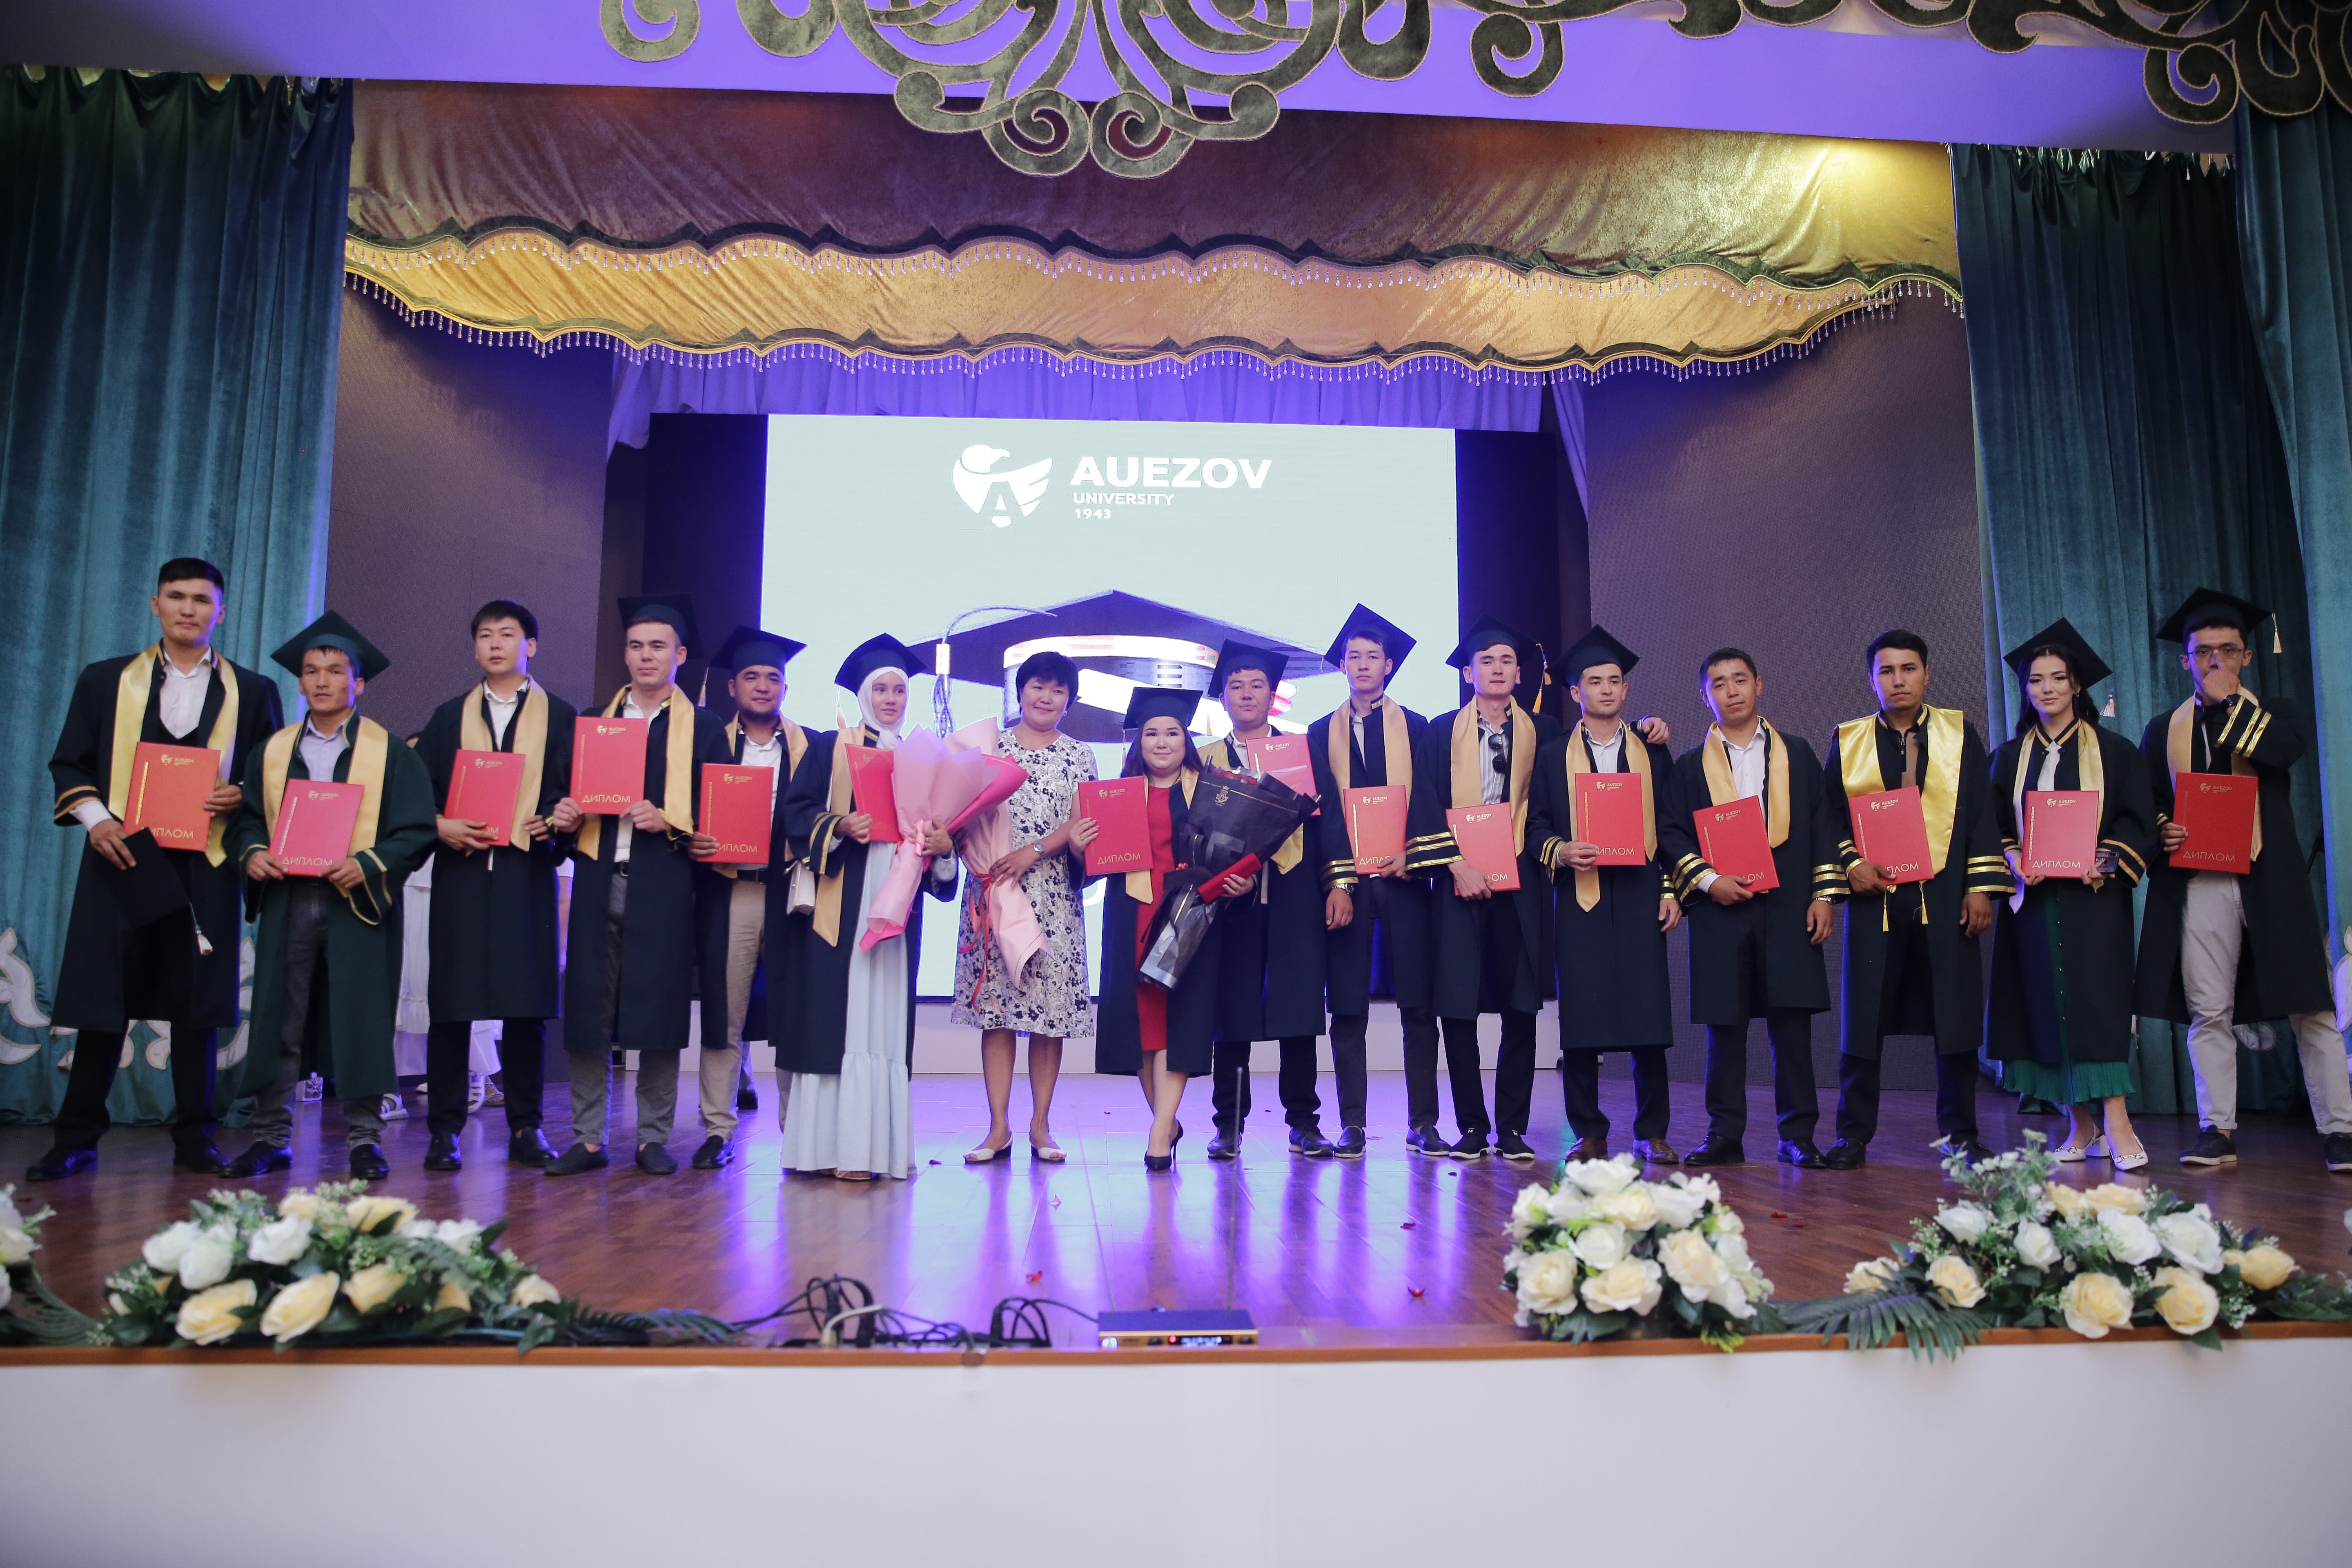  Awarding diplomas to graduates of the Agrarian Faculty